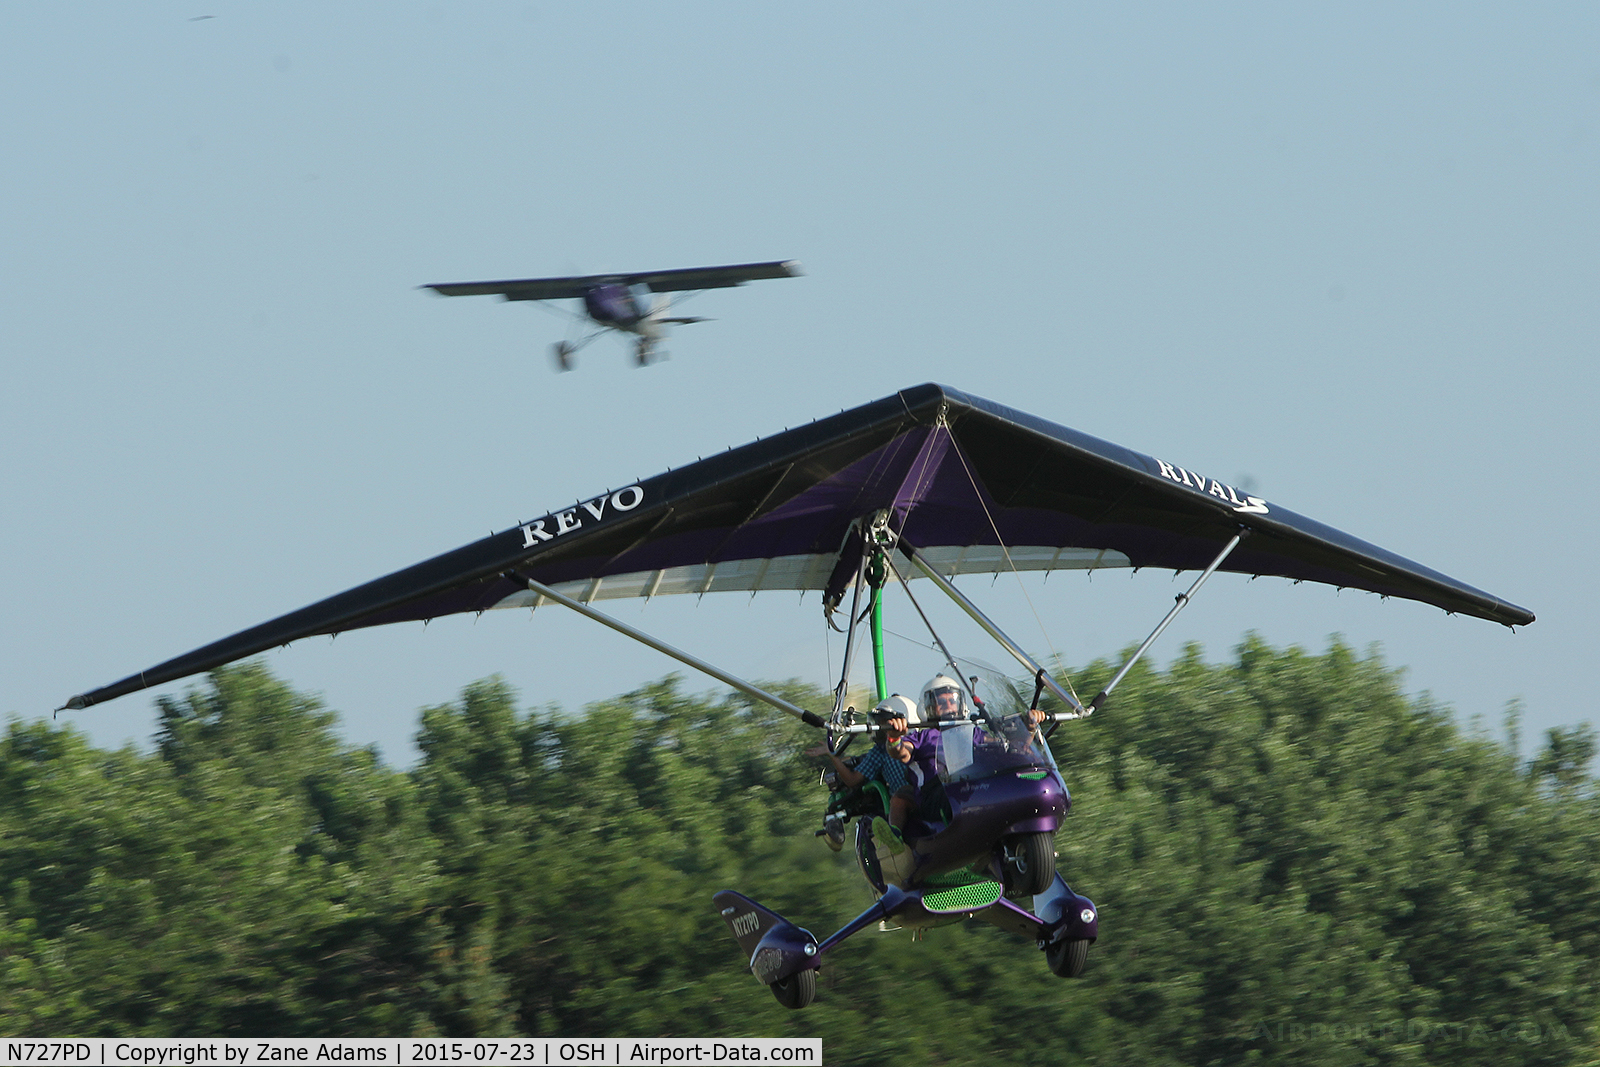 N727PD, 2013 Evolution Trikes Revo C/N 000593, 2015 EAA AirVenture - Oshkosh, Wisconsin